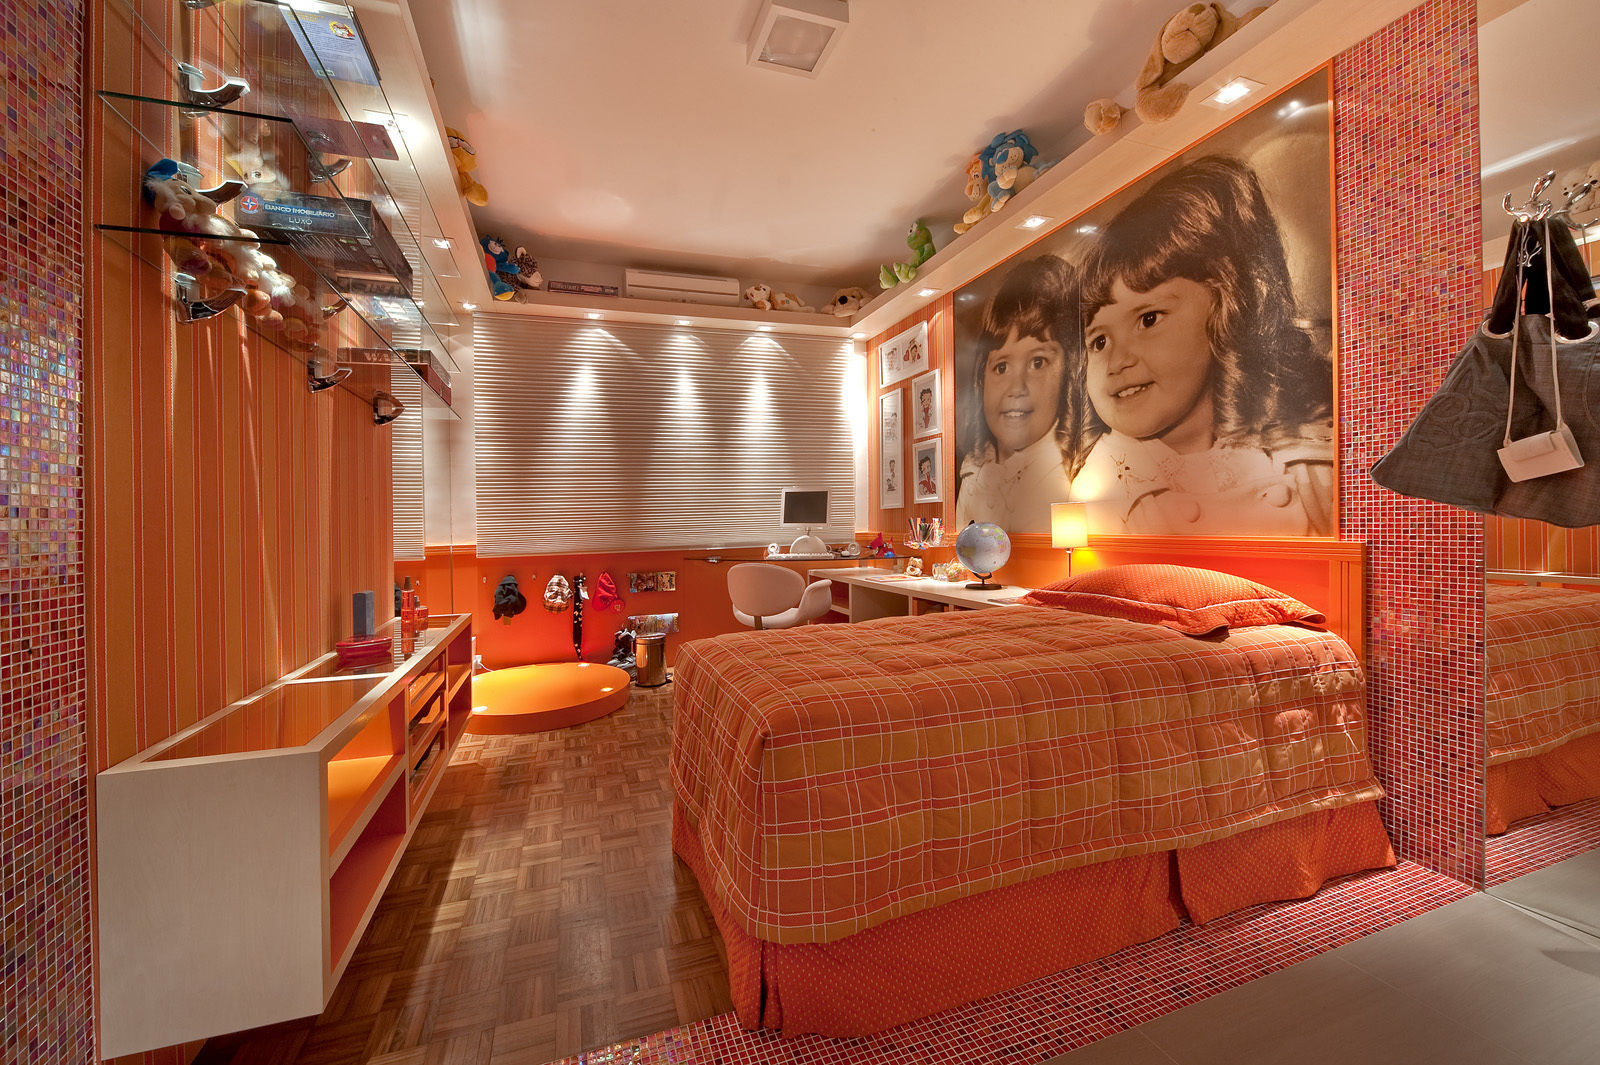 dormitório infantil, arquiteta aclaene de mello arquiteta aclaene de mello Детская комната в стиле модерн